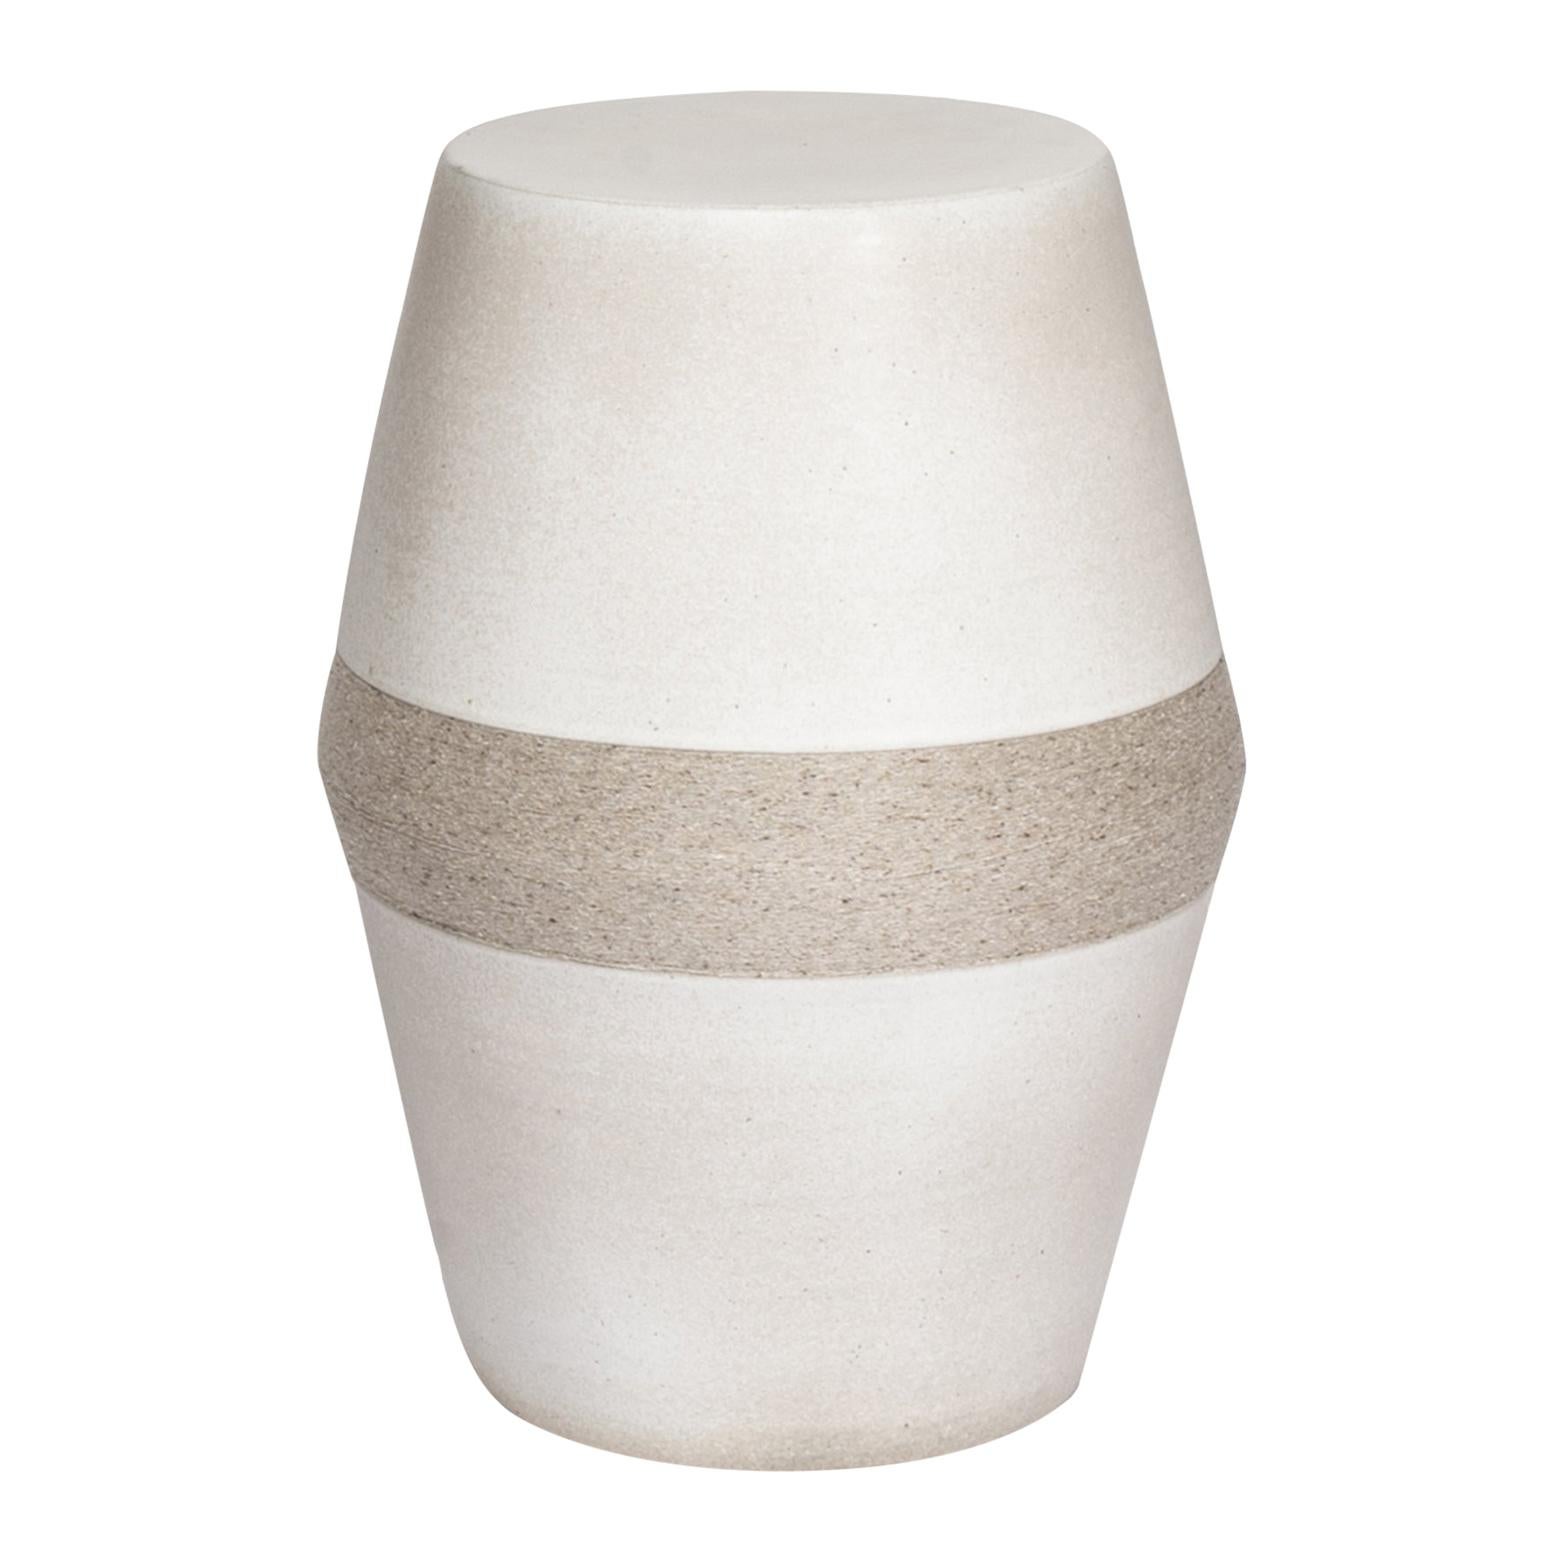 Finiiri ceramic with Yute thread details tall Stool 